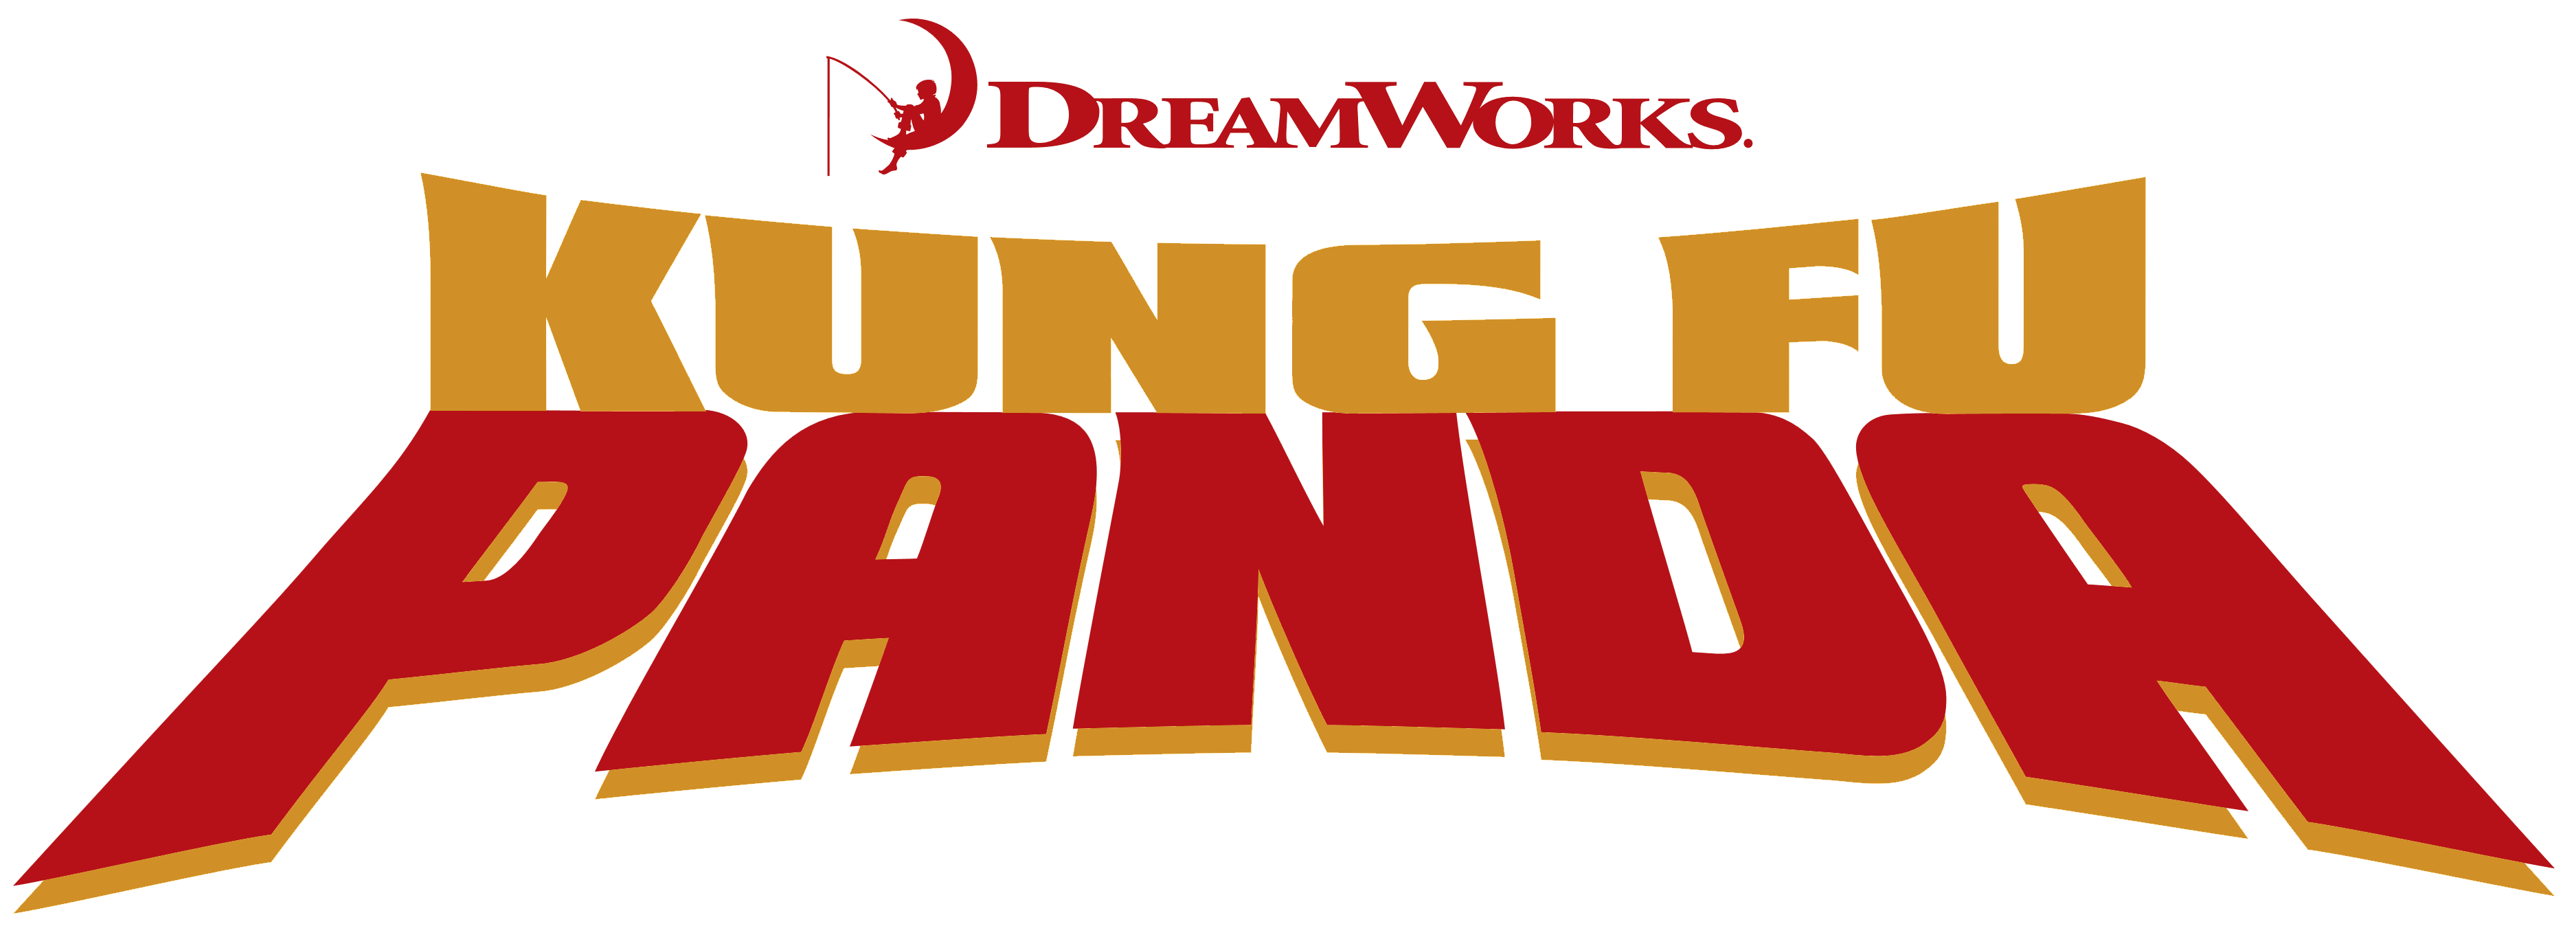 Kung Fu Panda Dreamworks Logo Images And Photos Finder